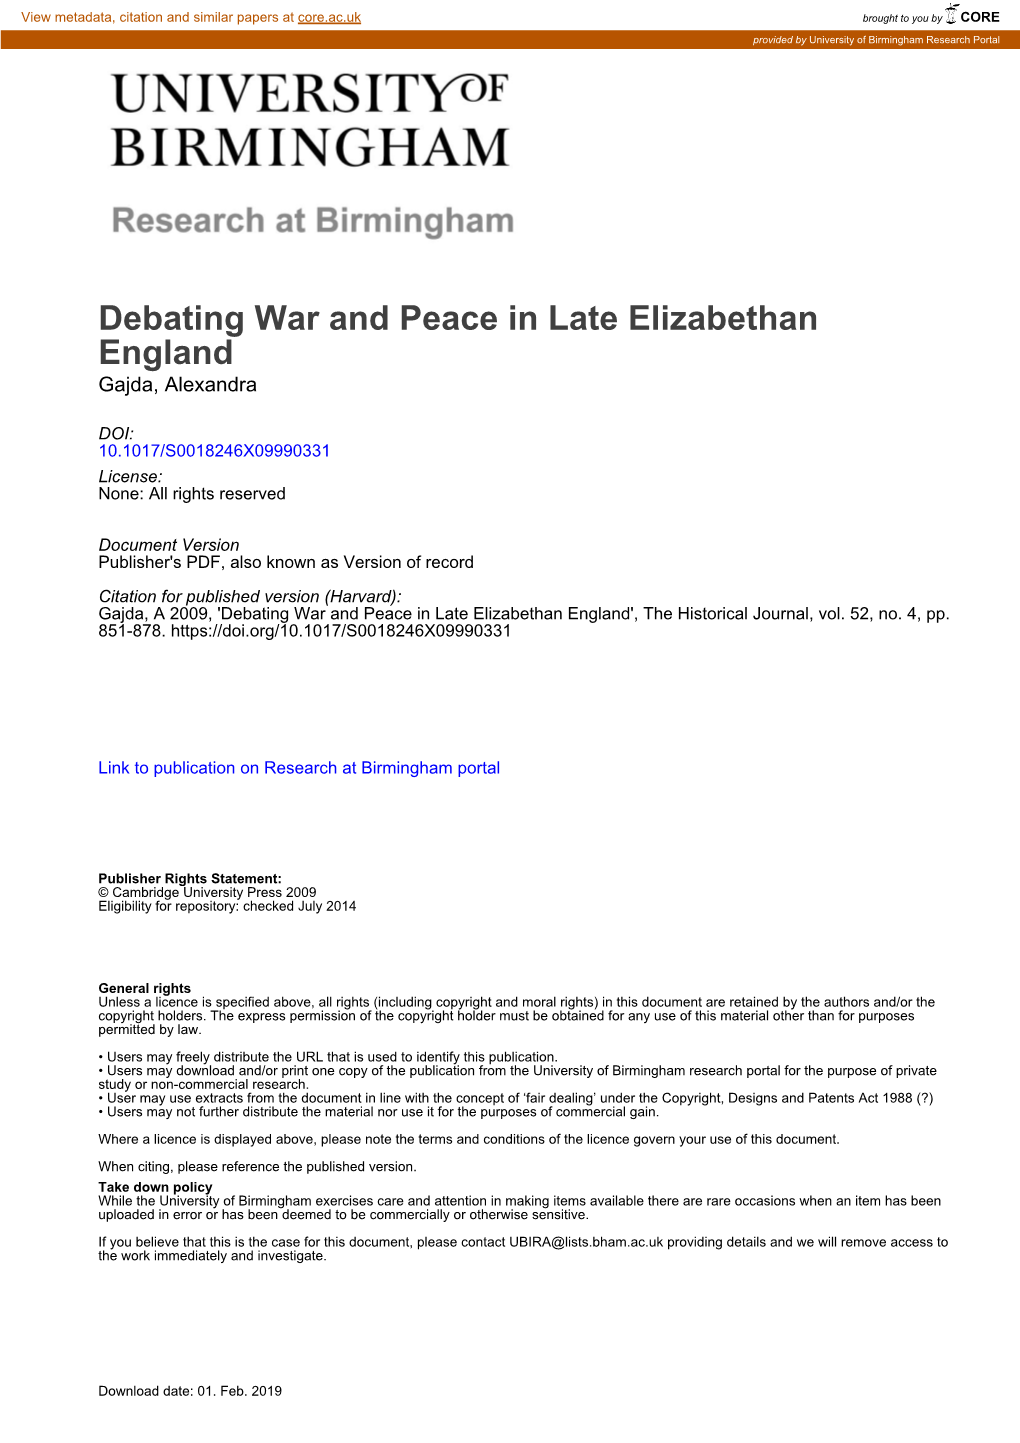 Debating War and Peace in Late Elizabethan England Gajda, Alexandra